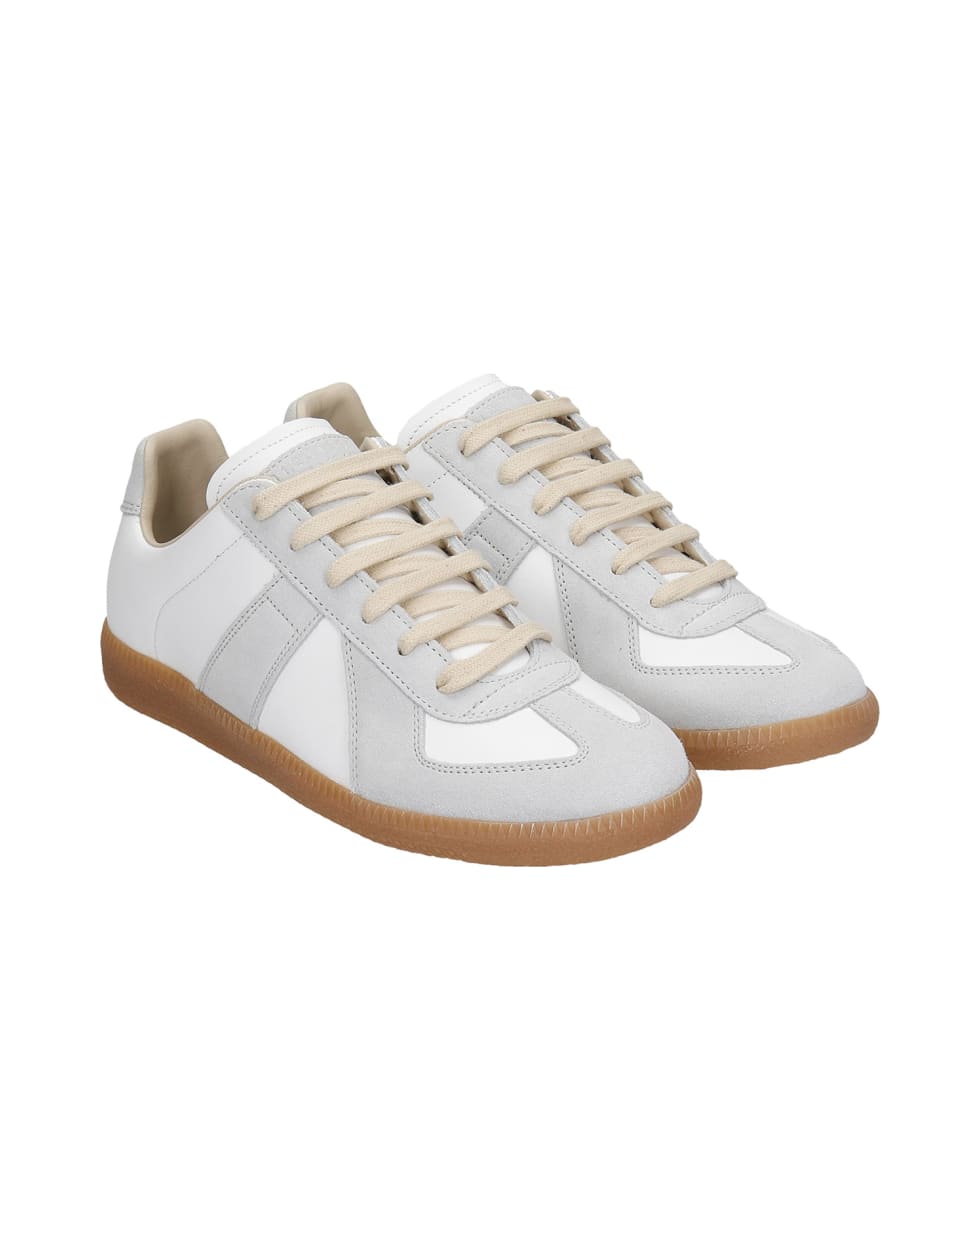 Maison Margiela Replica Sneakers In White Leather - white